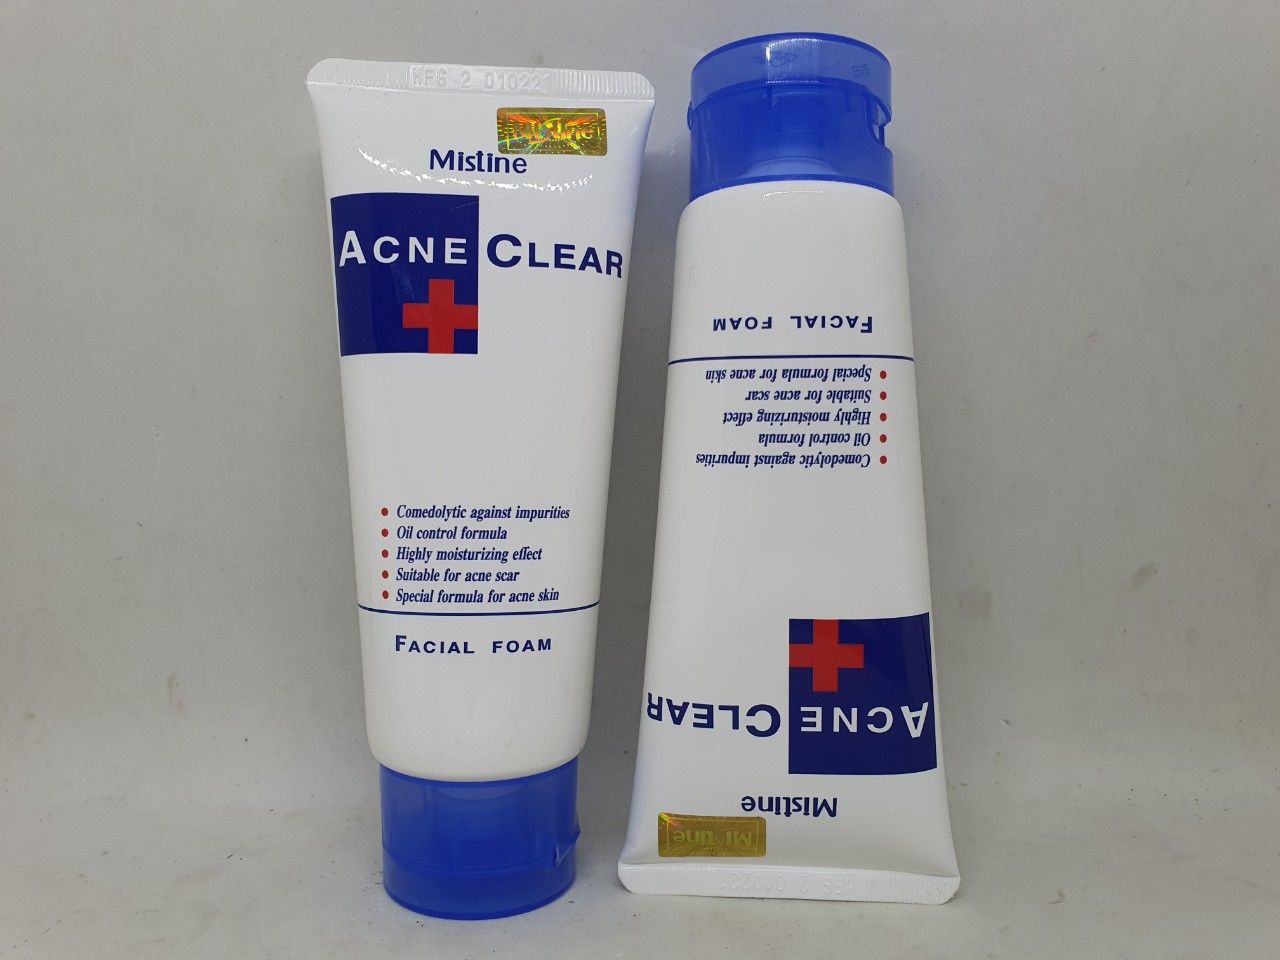  Sữa rữa mặt mistine acne clear facial foam chính hãng thái lan 85 gam 